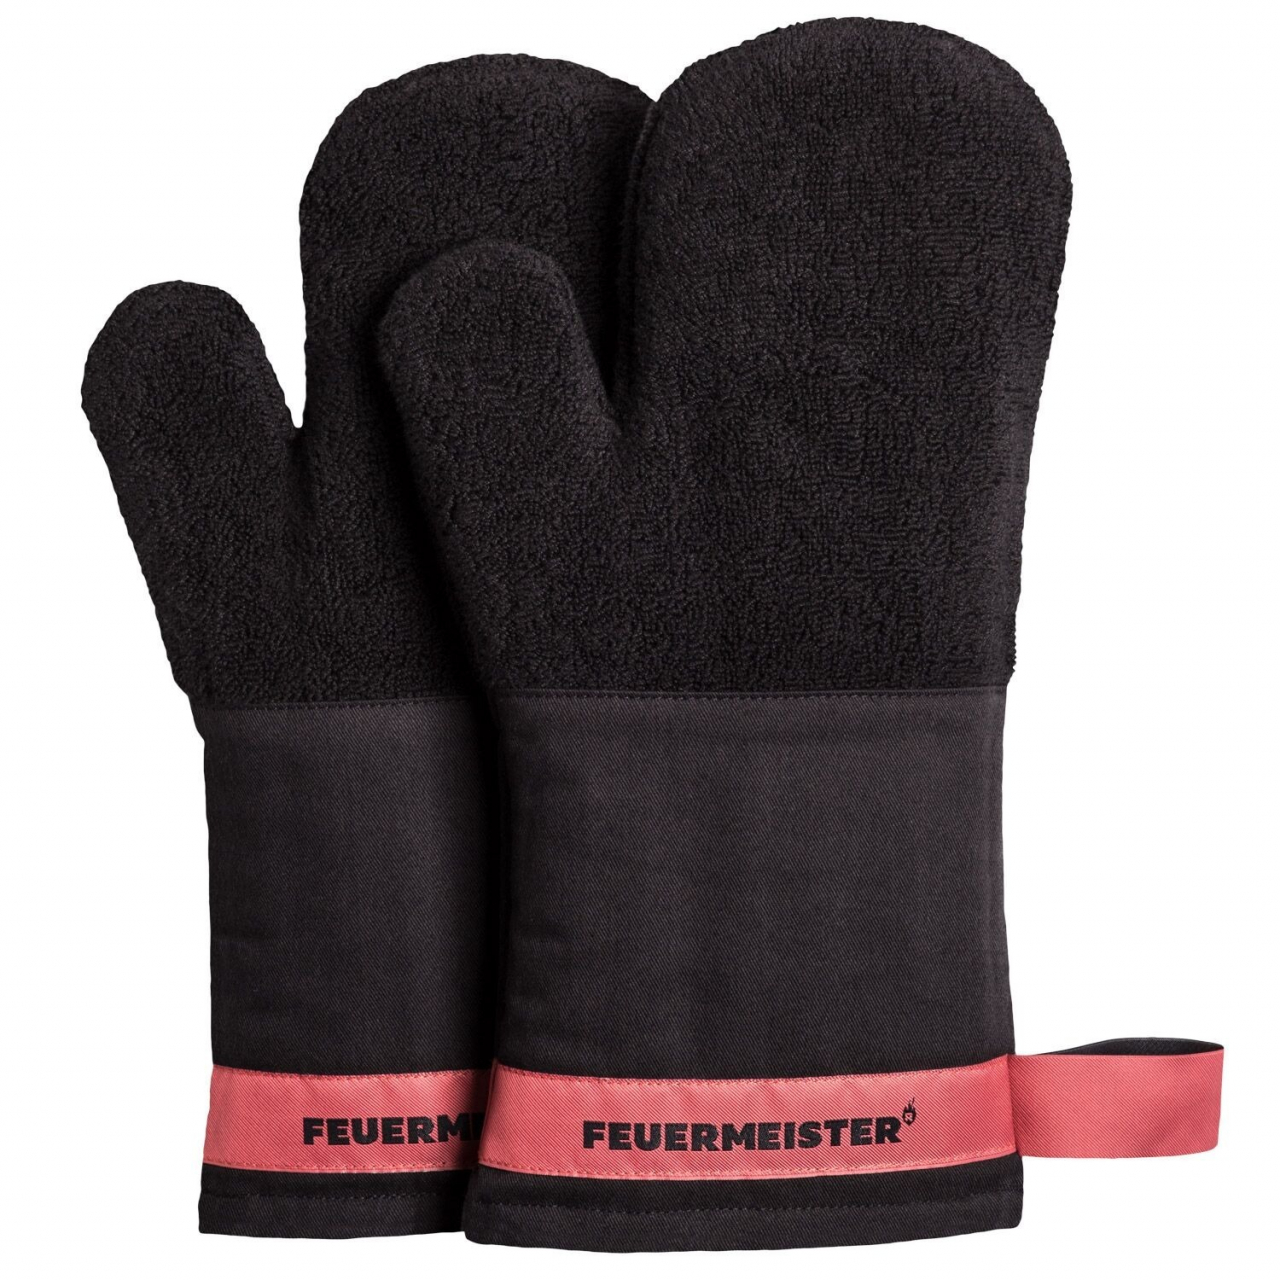 Kuchyňské rukavice Feuermeister Premium - černé, 8